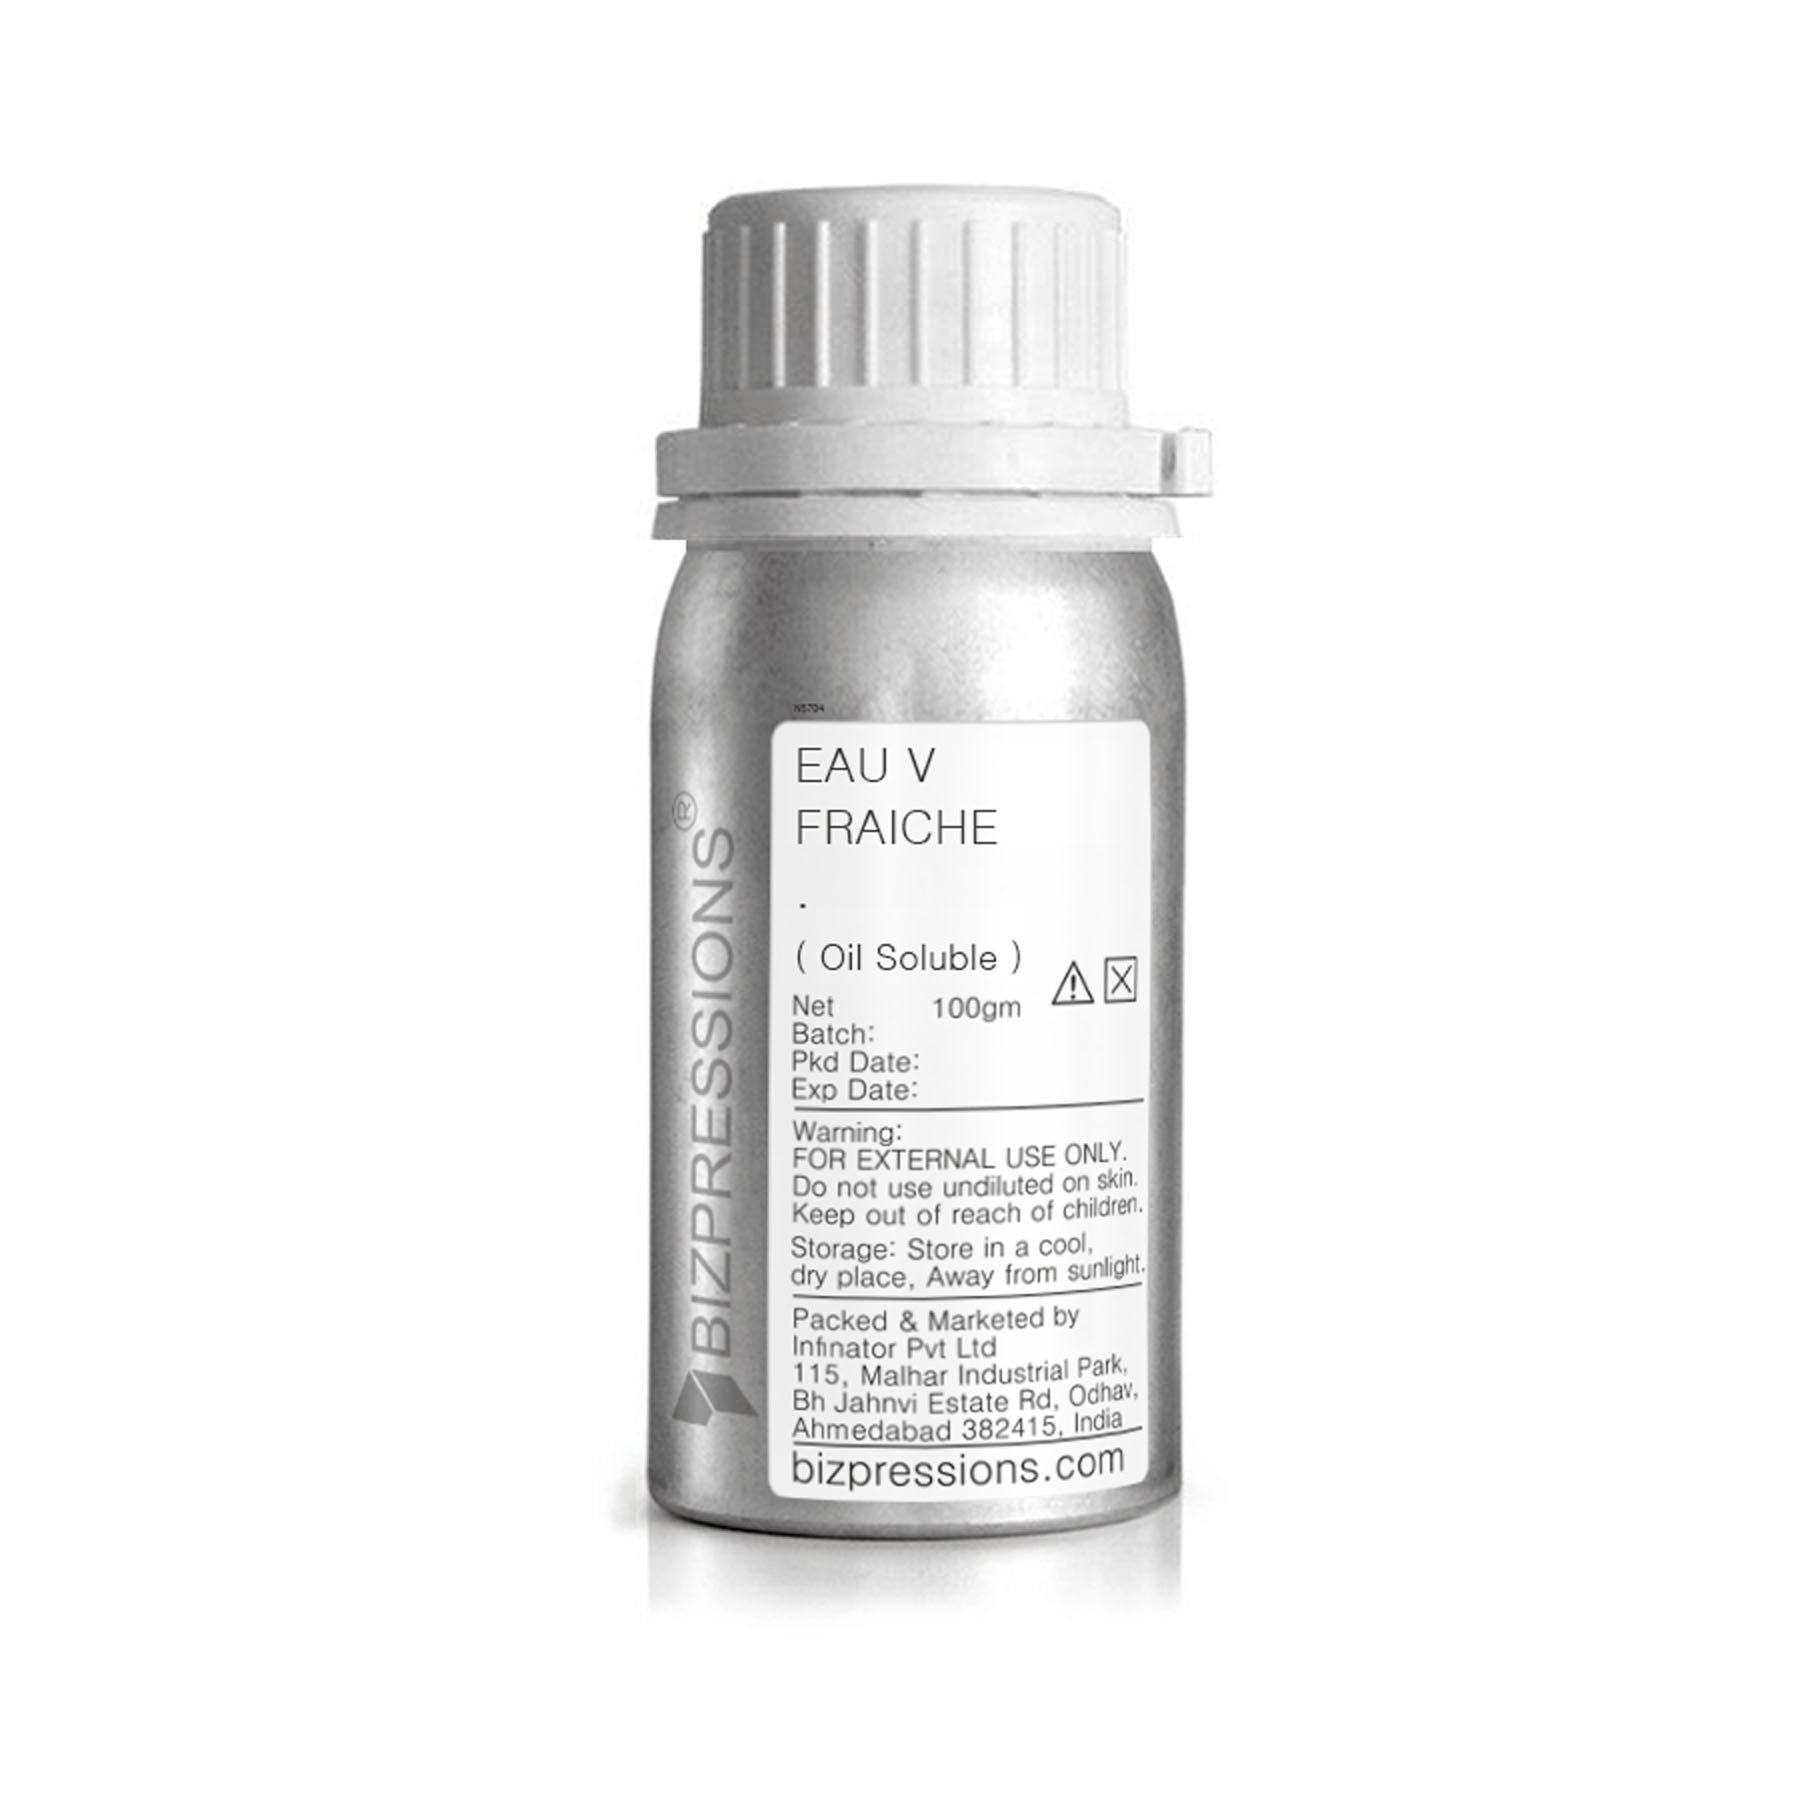 EAU V FRAICHE - Fragrance ( Oil Soluble ) - 100 gm